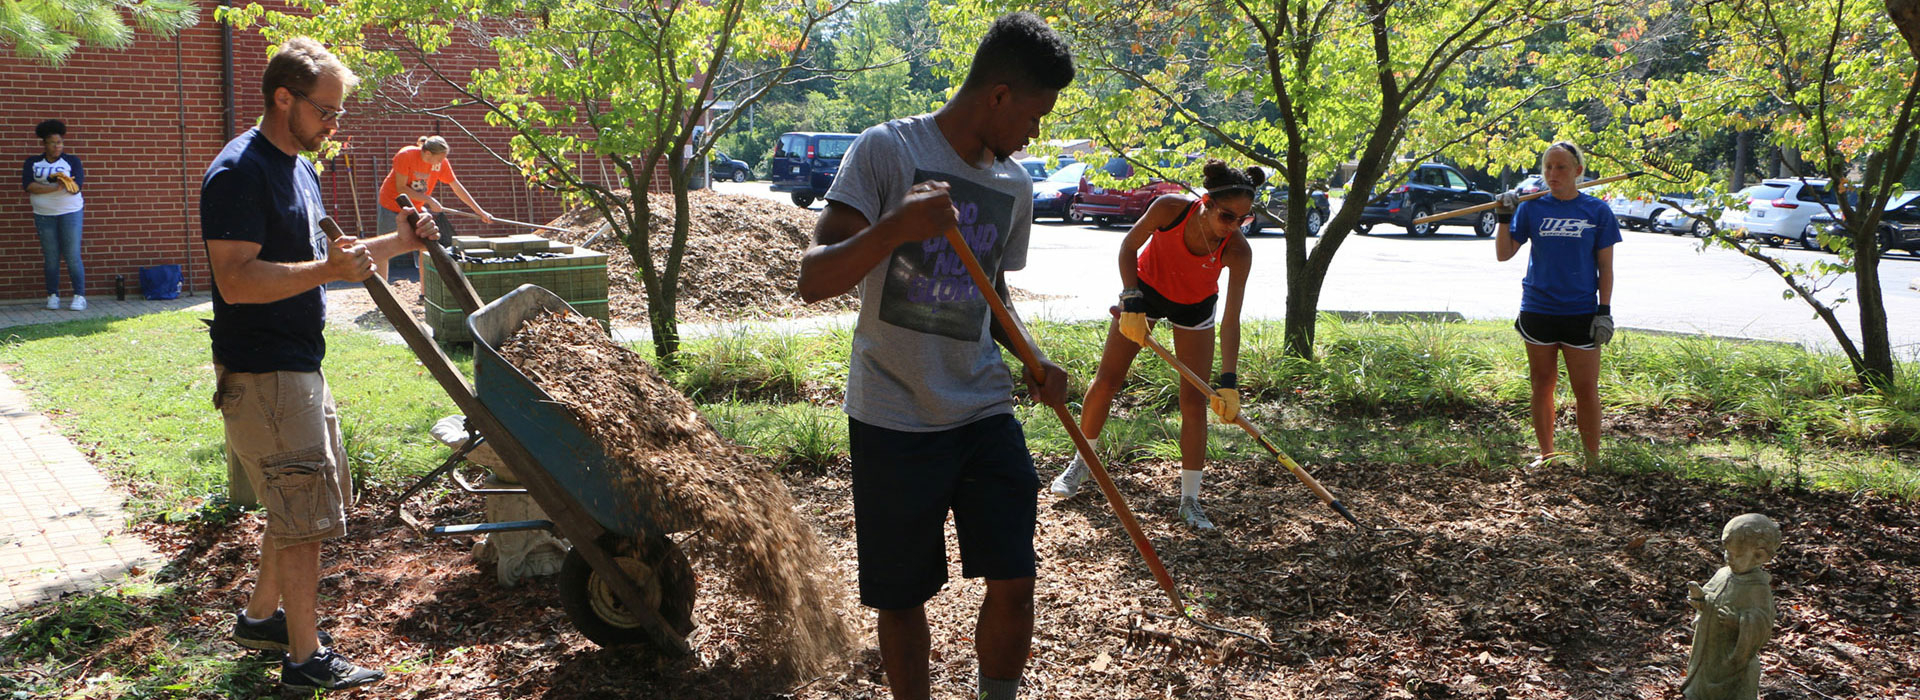 Students engaged in volunteer activities outdoors